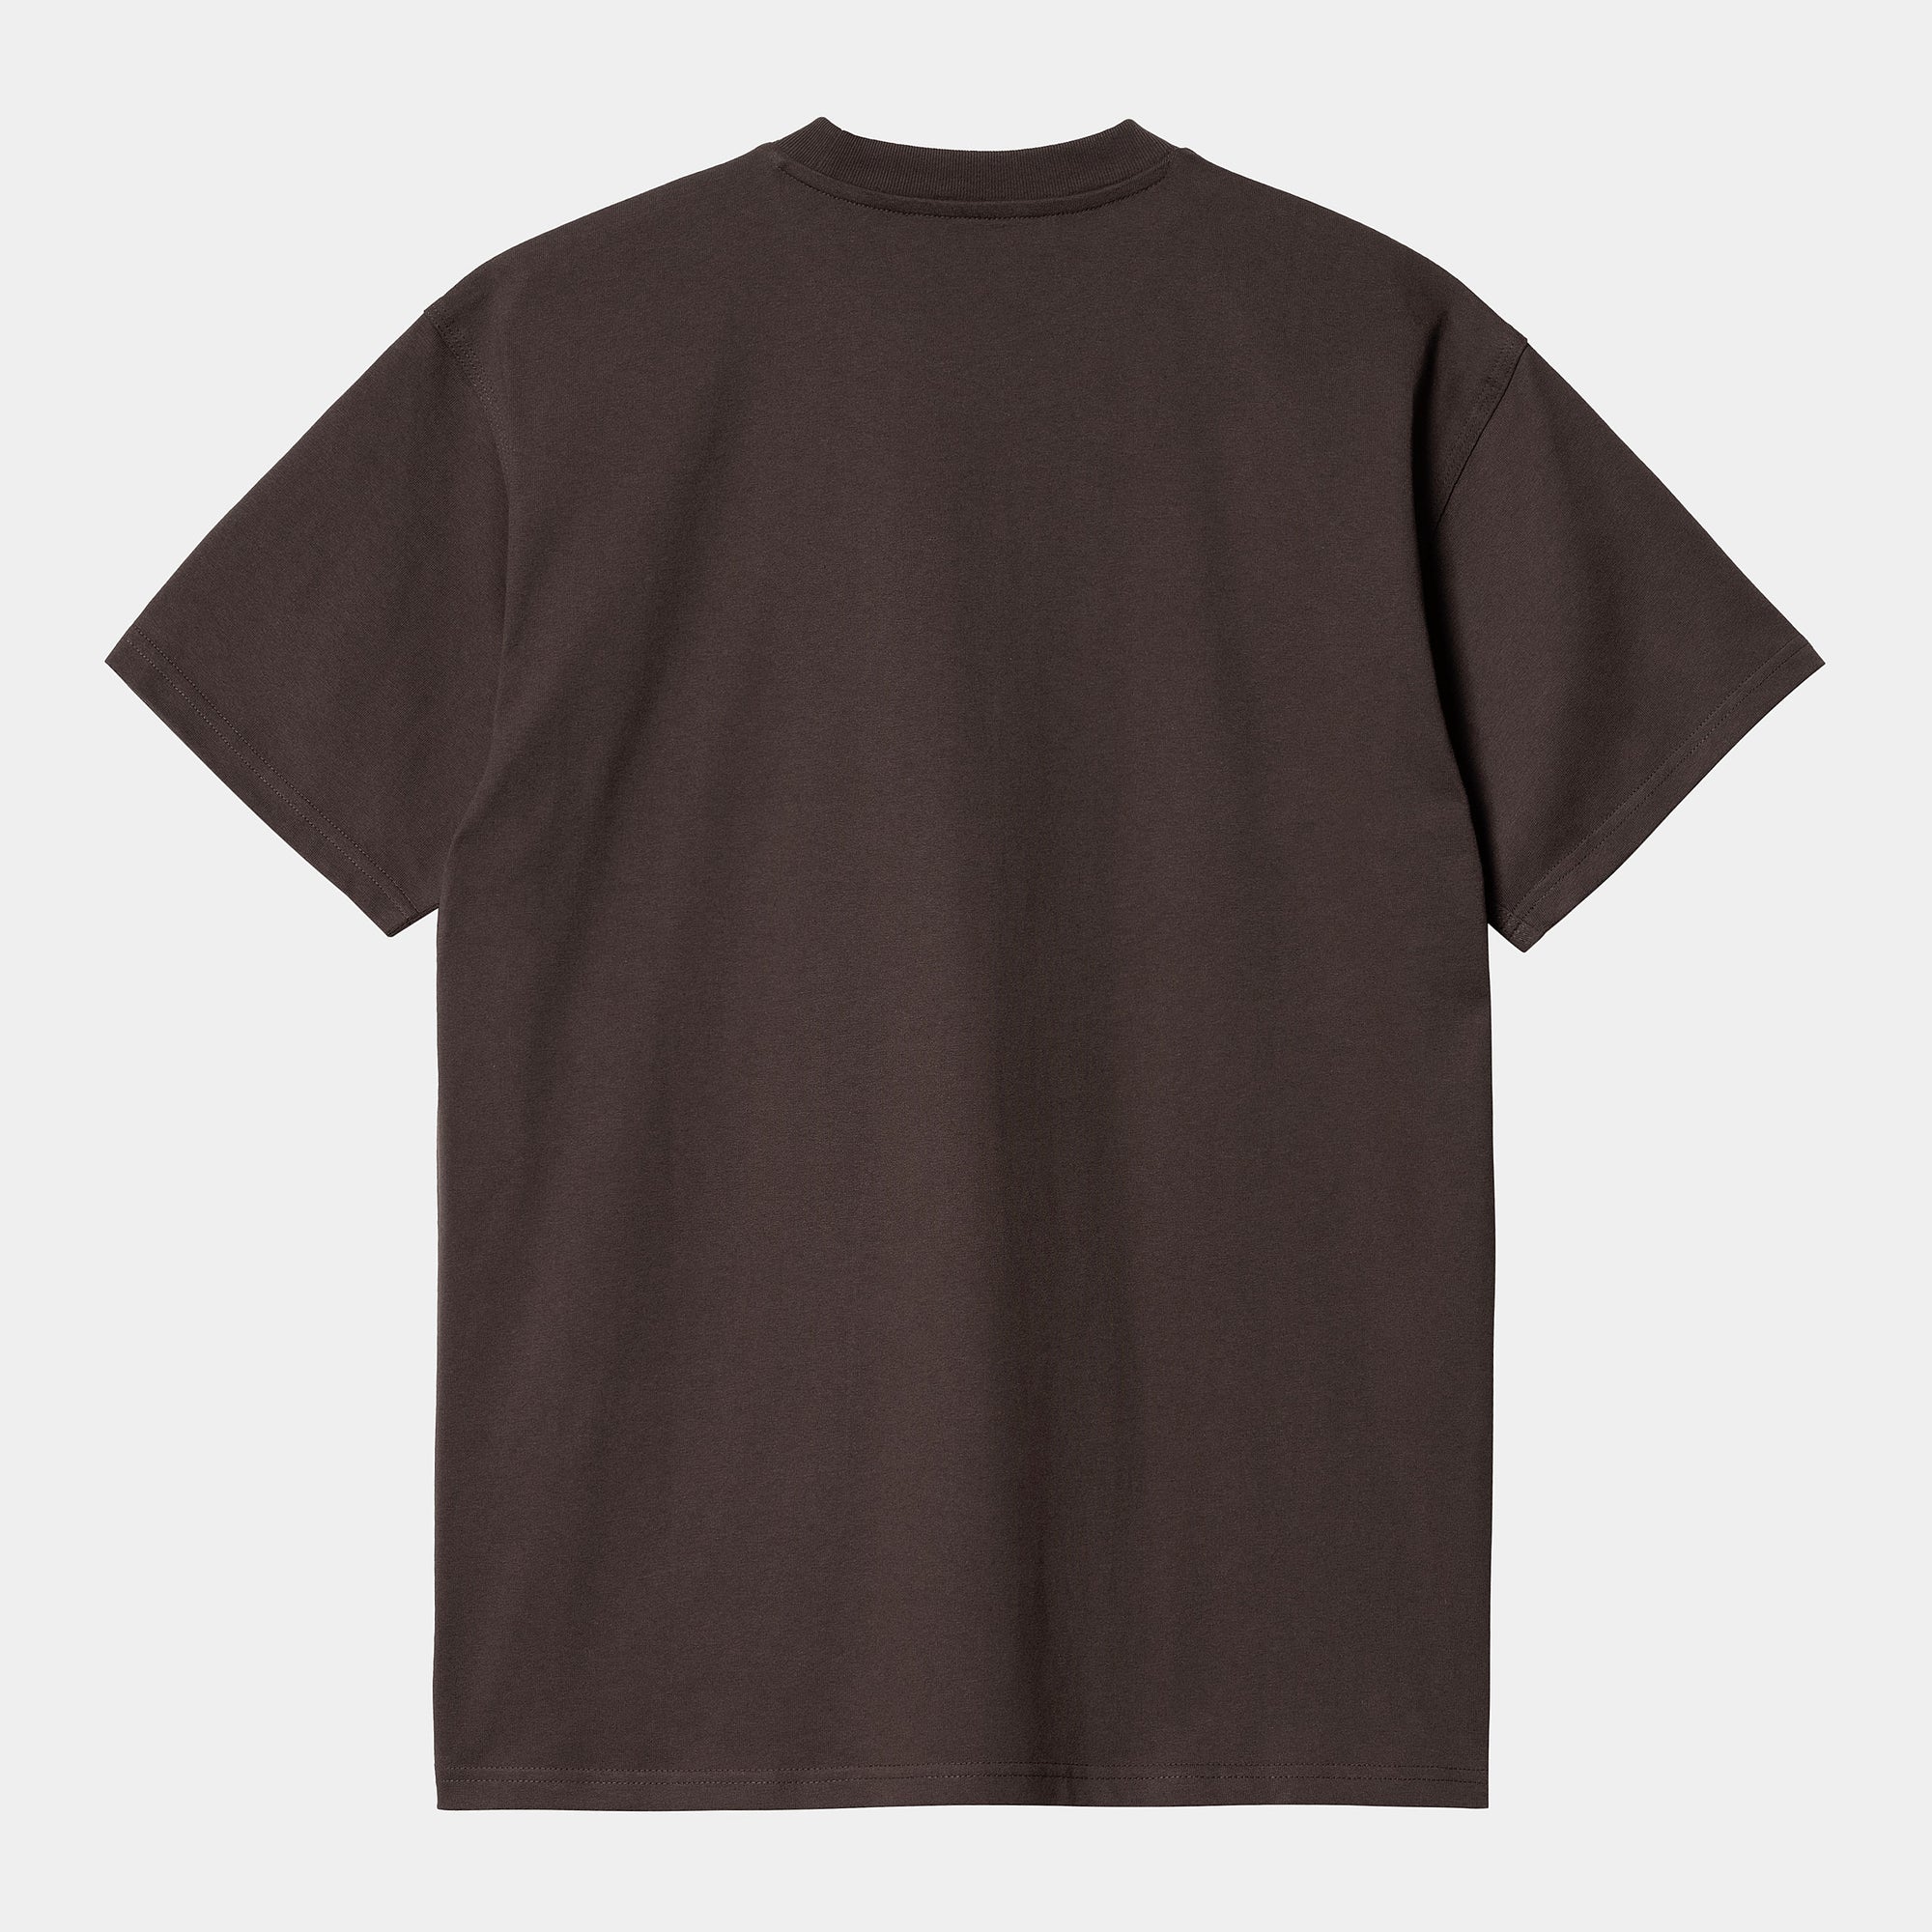 Carhartt WIP - American Script T-Shirt - Buckeye